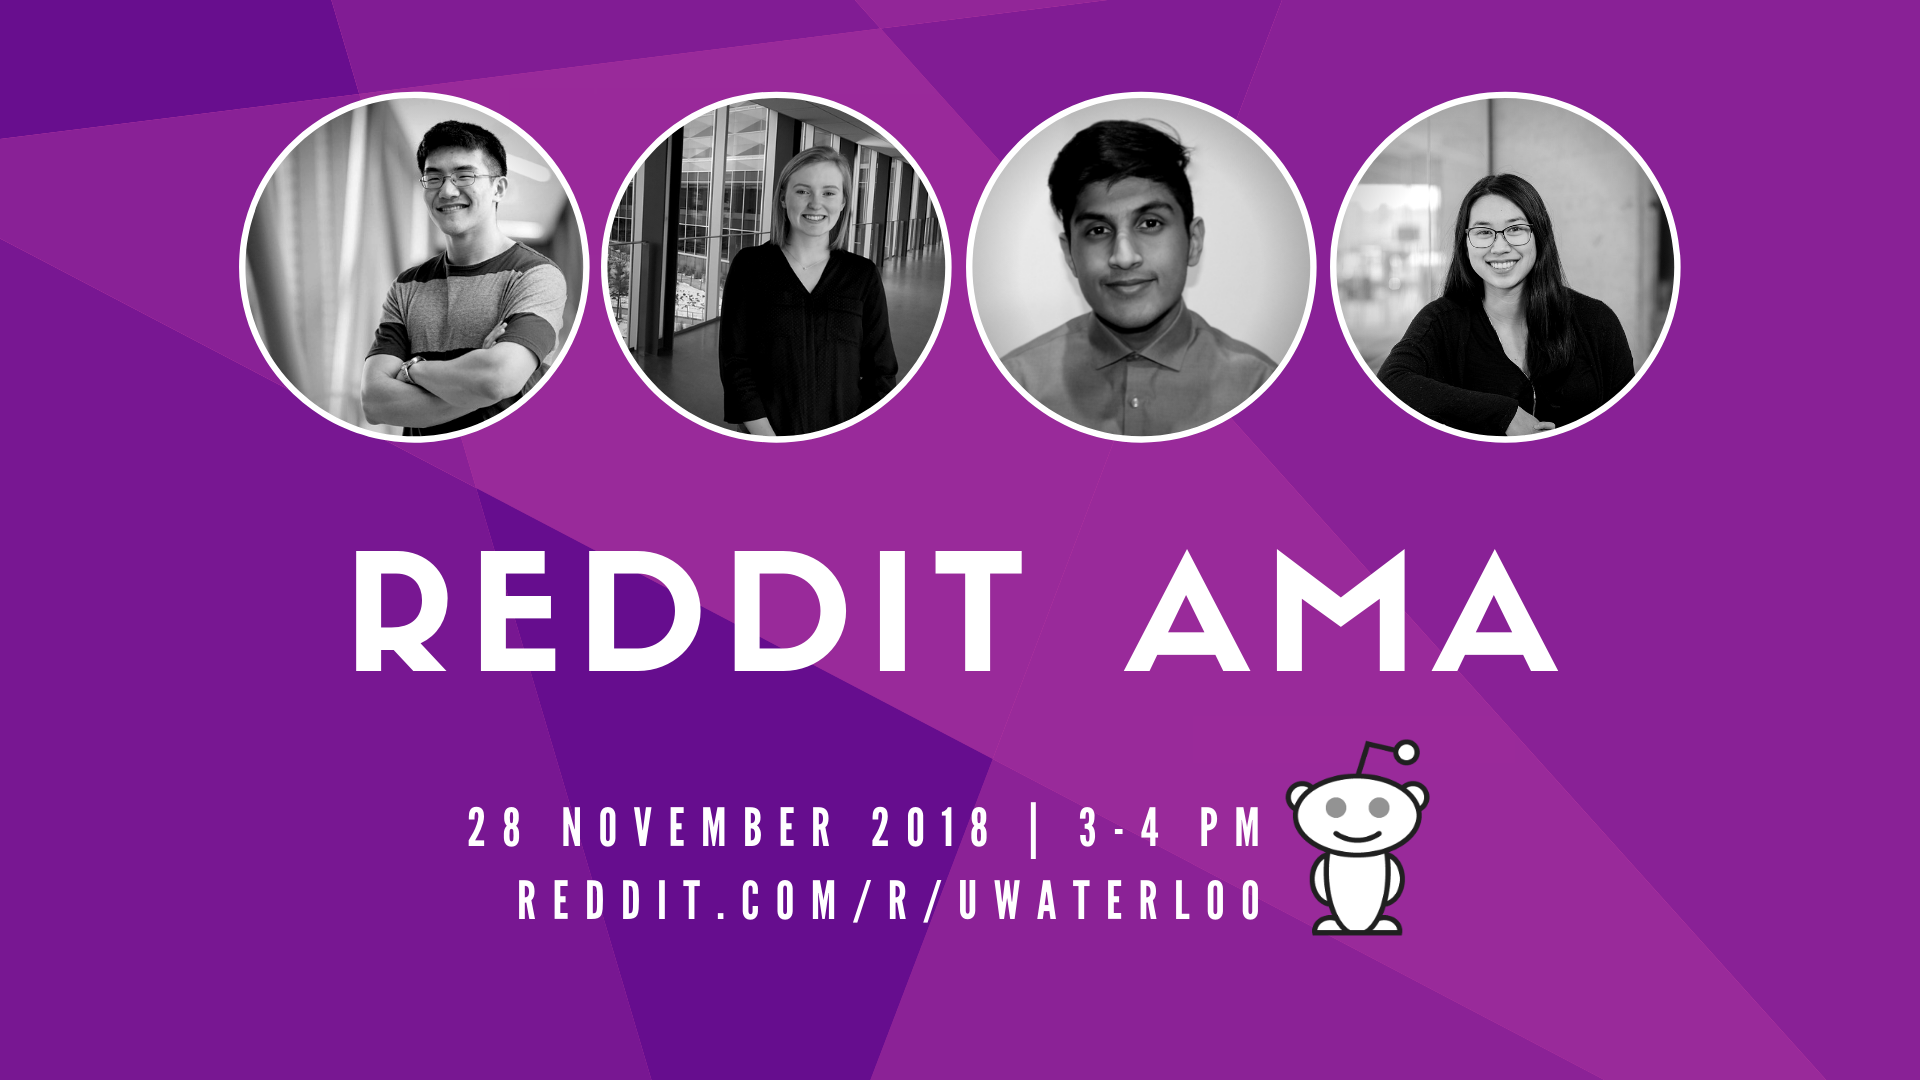 Engineering Ambassadors are hosting a Reddit AMA on November 28